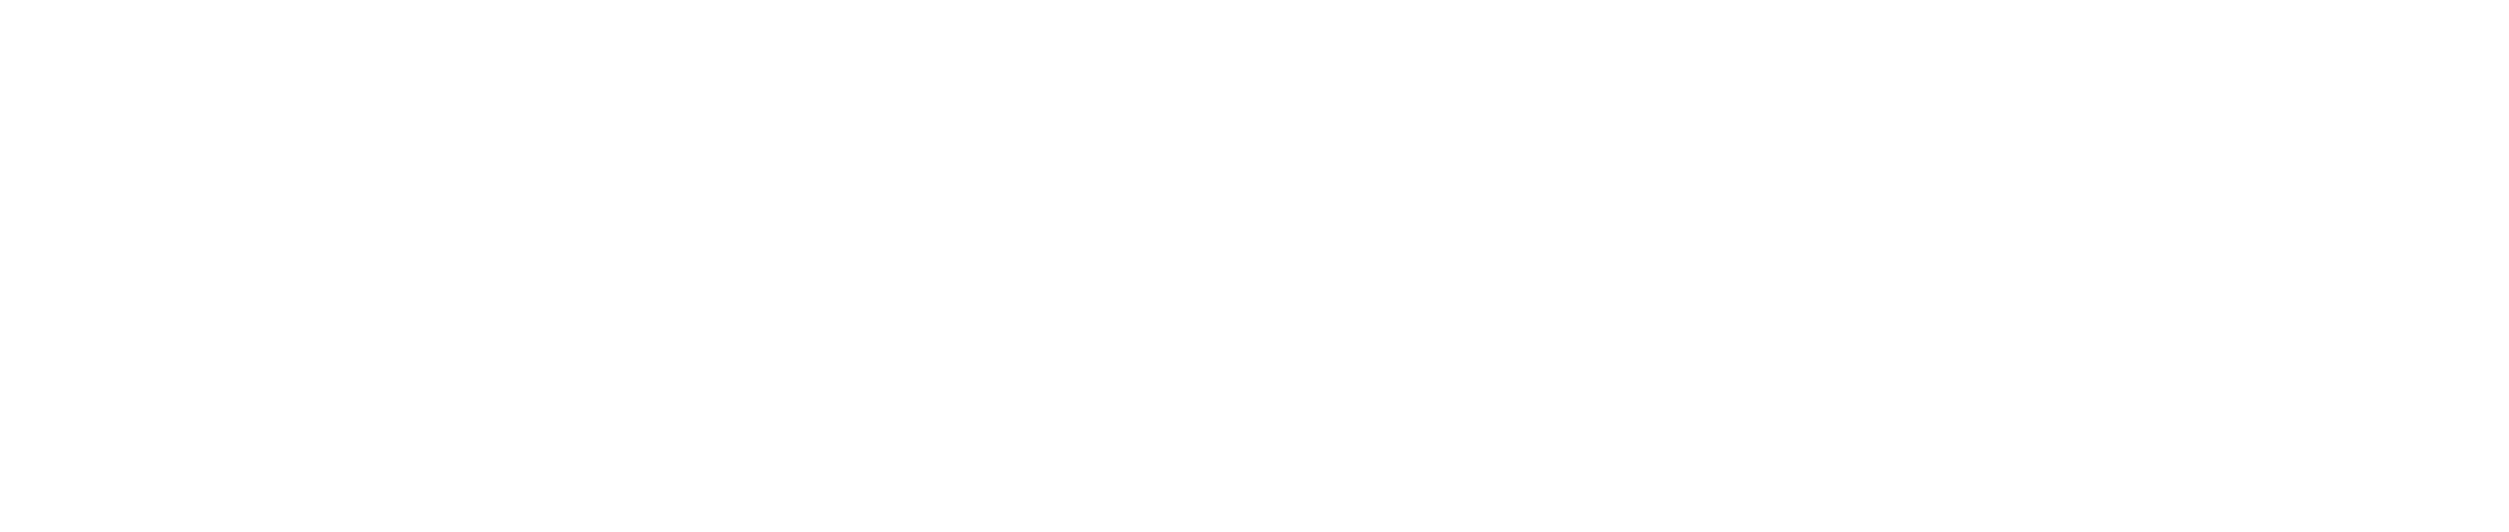 gridscale GmbH logo